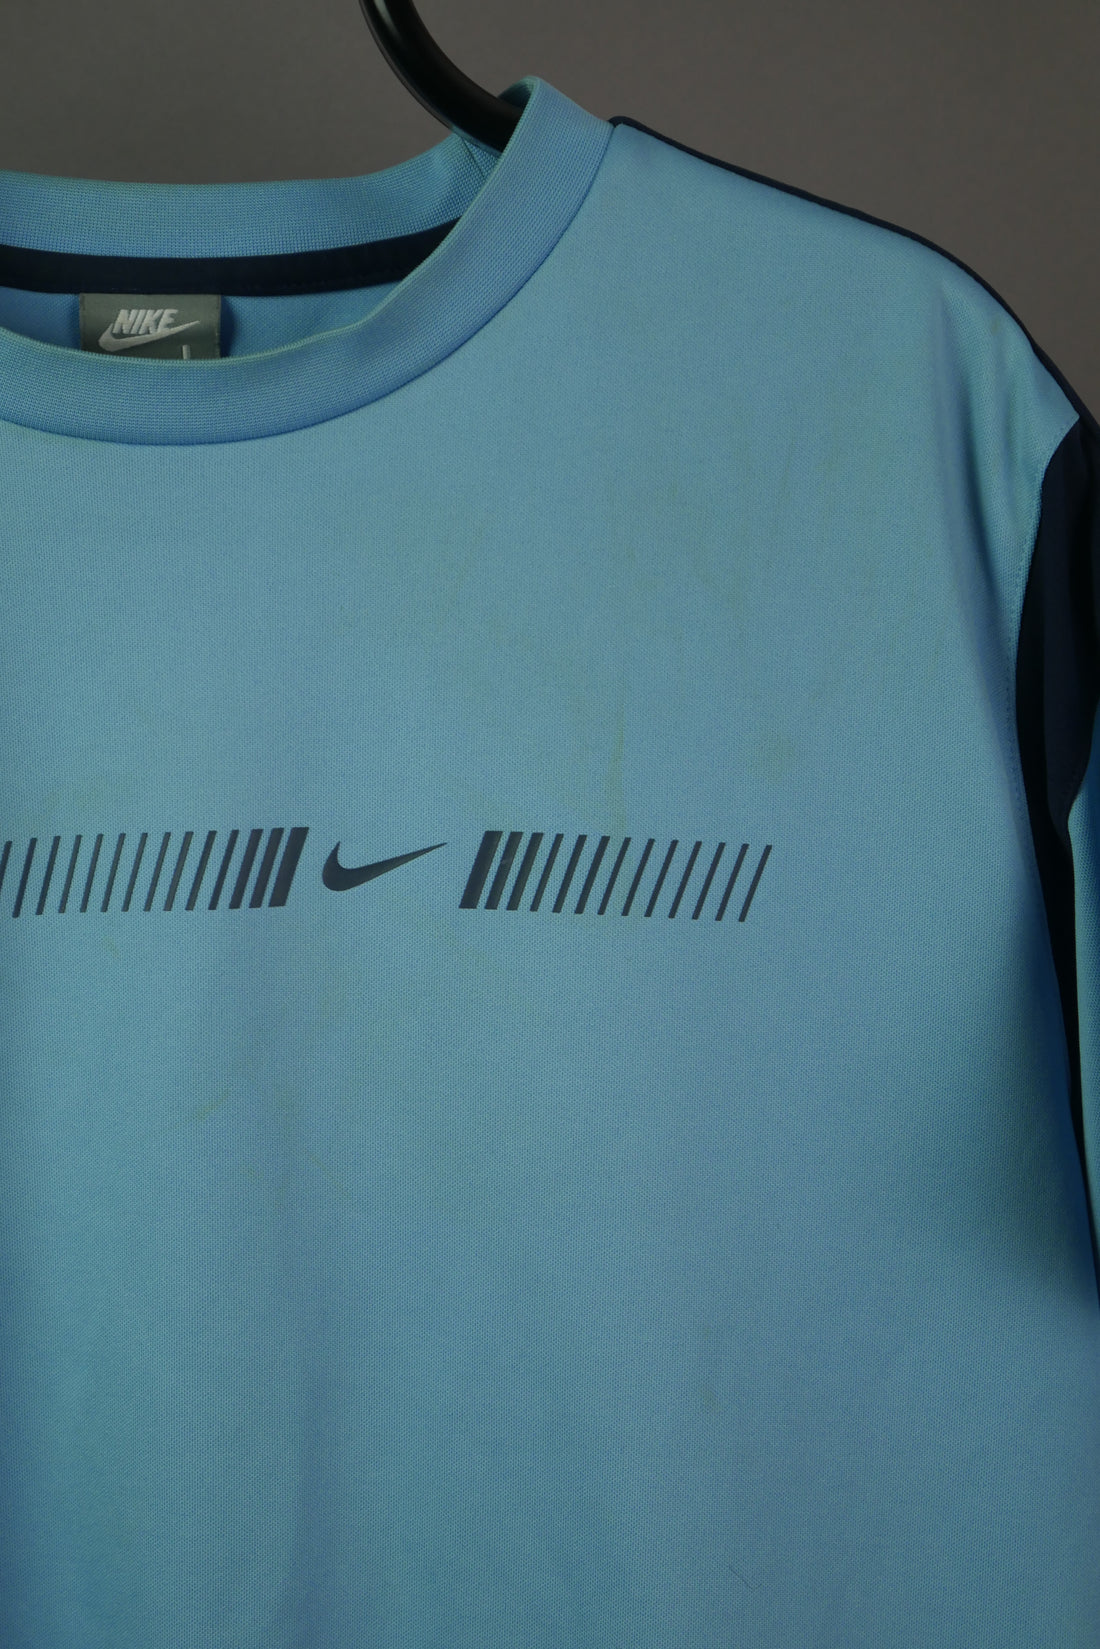 The Nike Vintage T-Shirt (L)